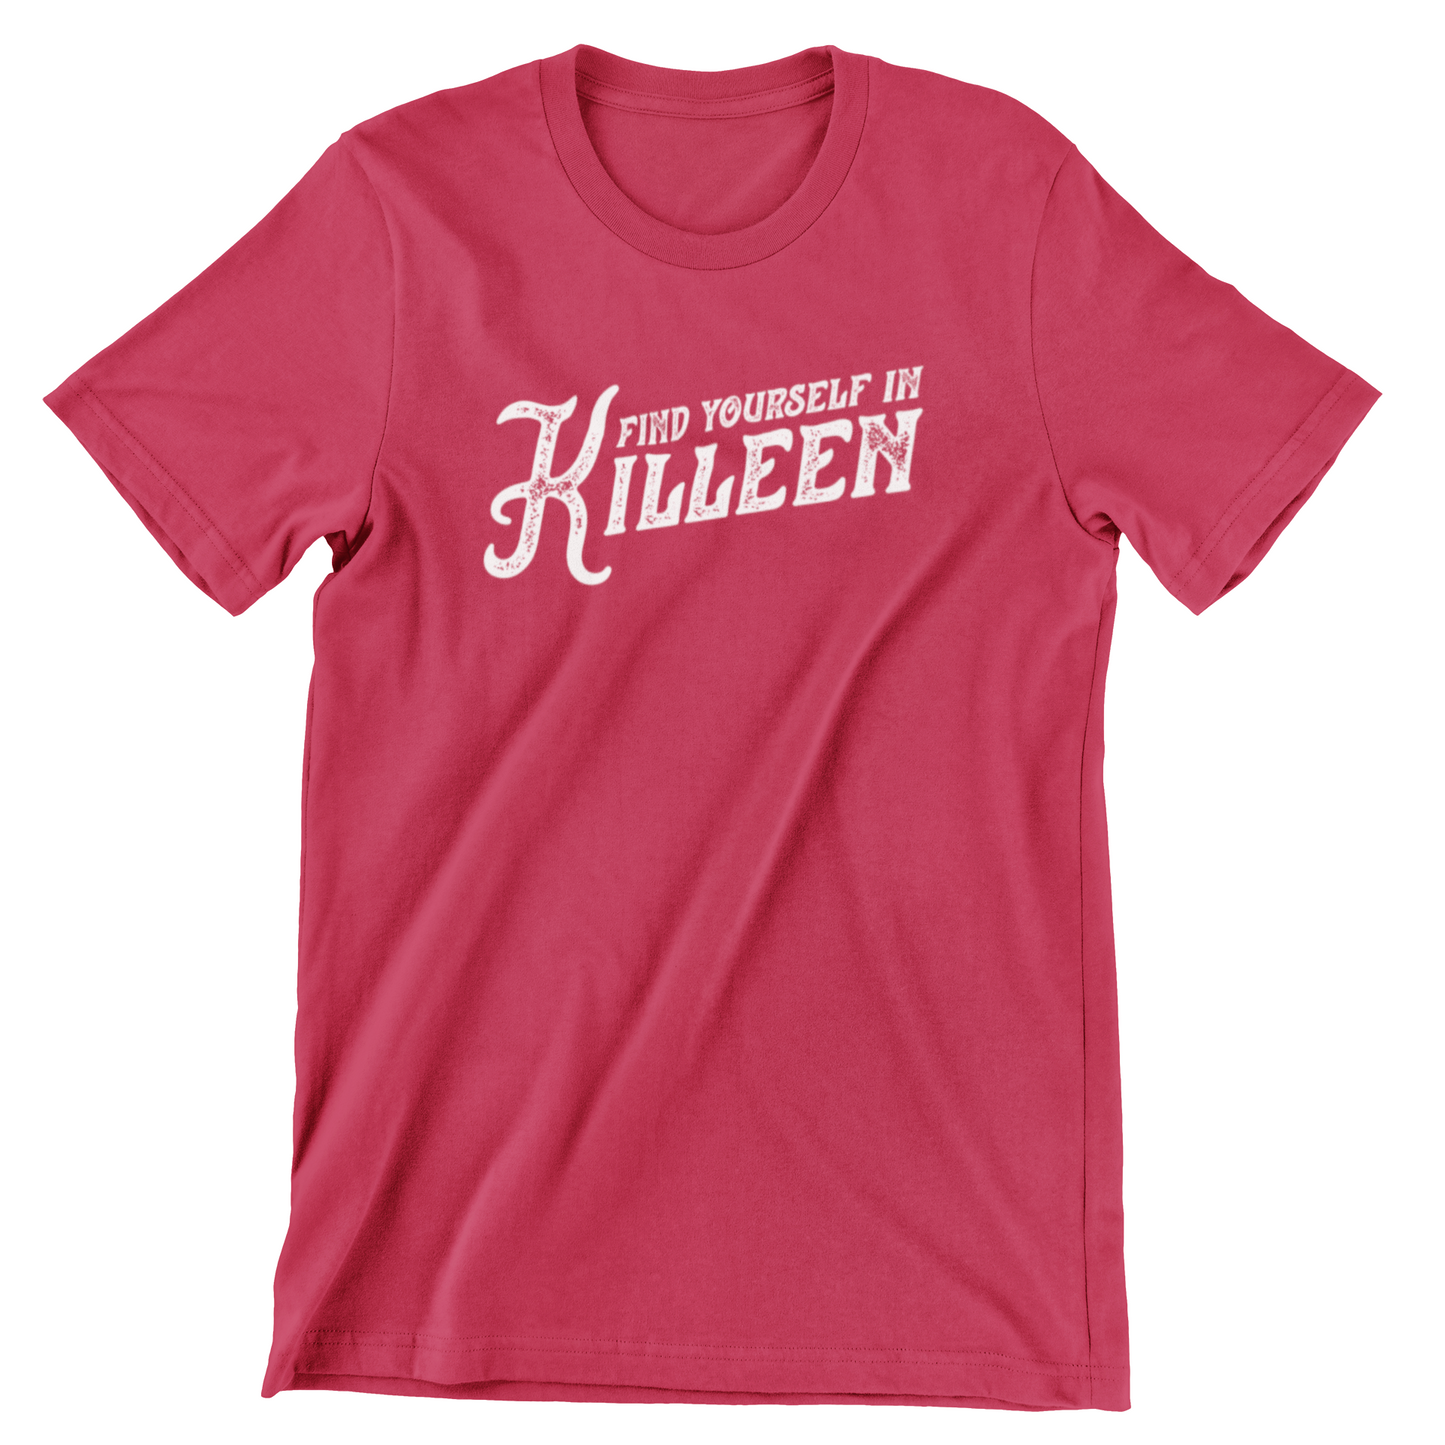 Killeen Texas T-shirt - Find Yourself